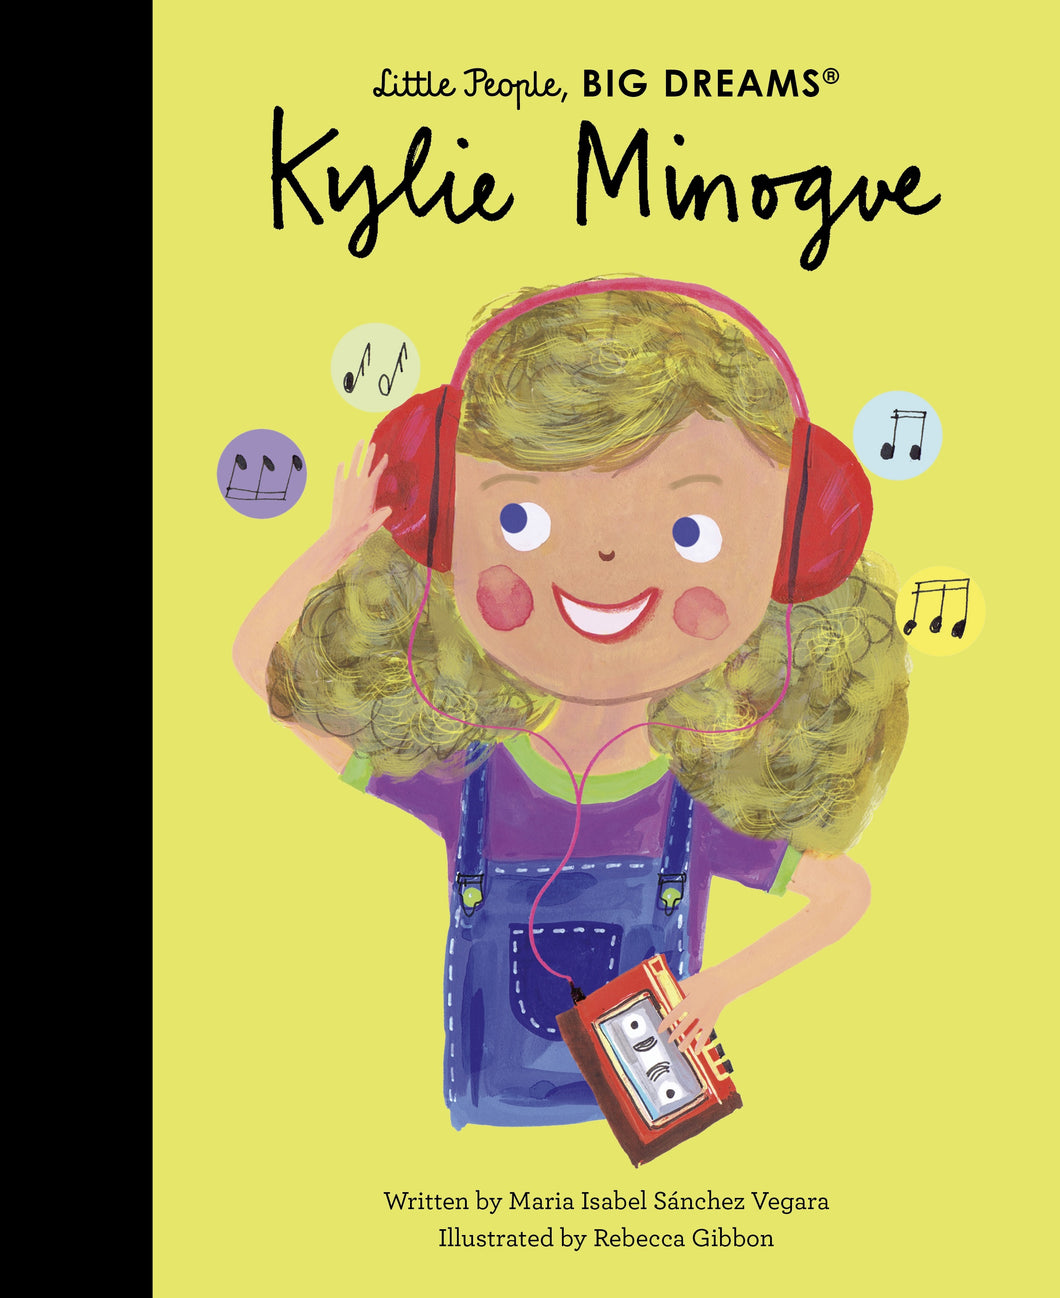 Little People Big Dreams: Kylie Minogue by Maria Isabel Sánchez Vegara